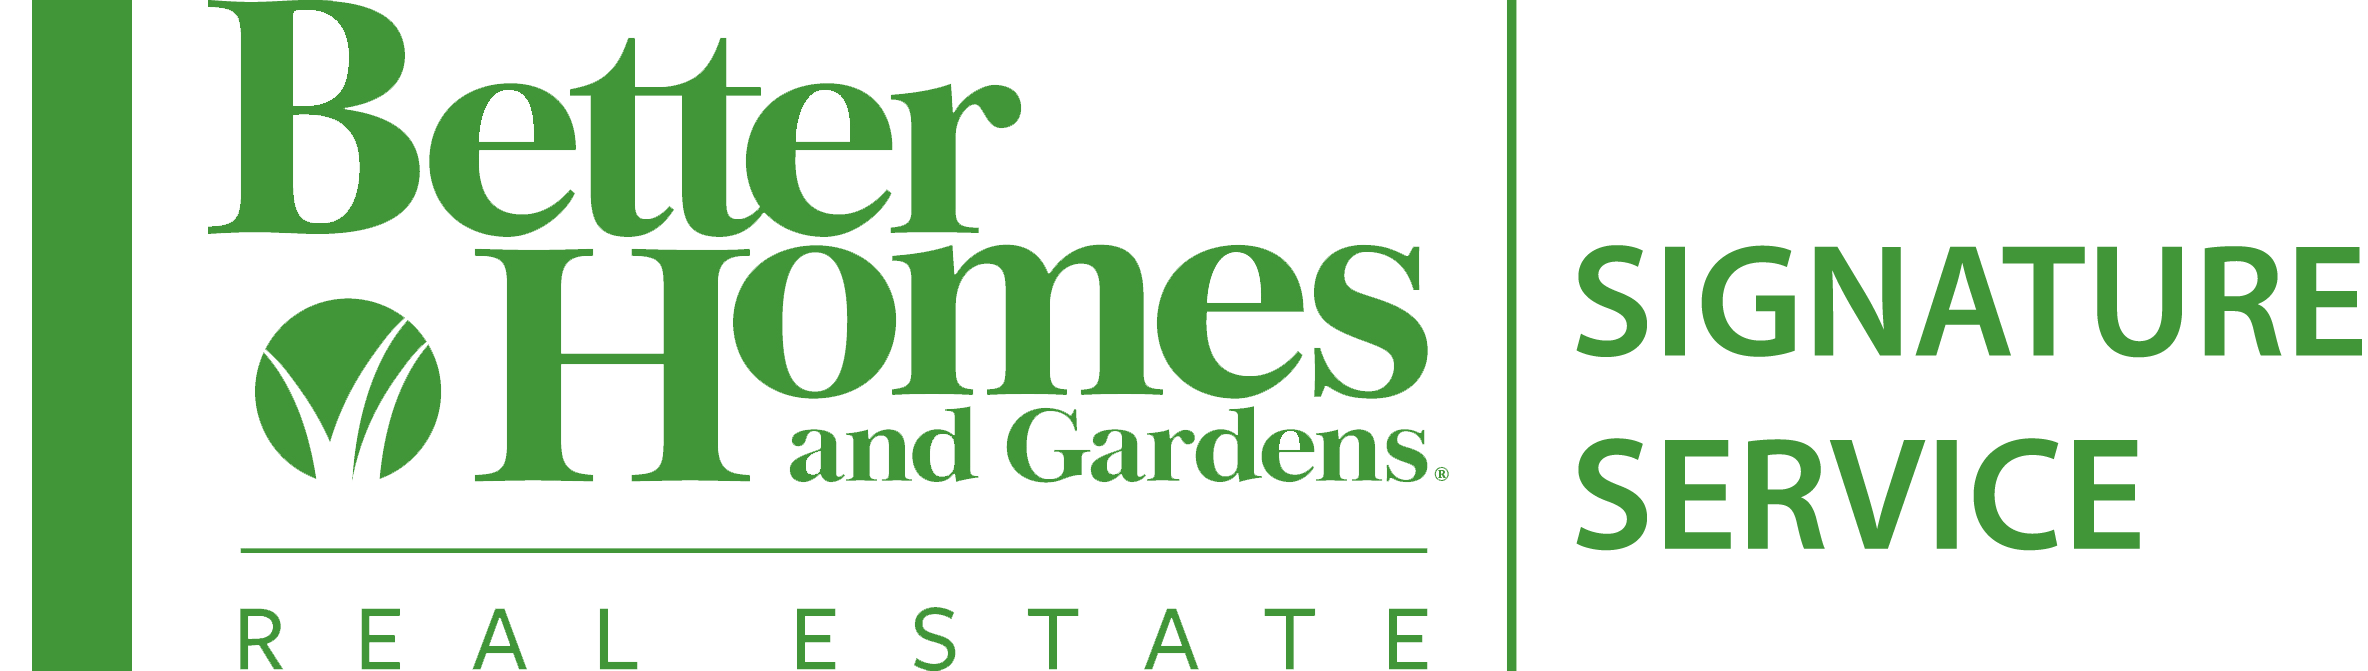 Better homes com. Better Homes and Gardens посуда. Better Homes and Gardens кружки. Зеленый сад логотип. Северный сад лого.